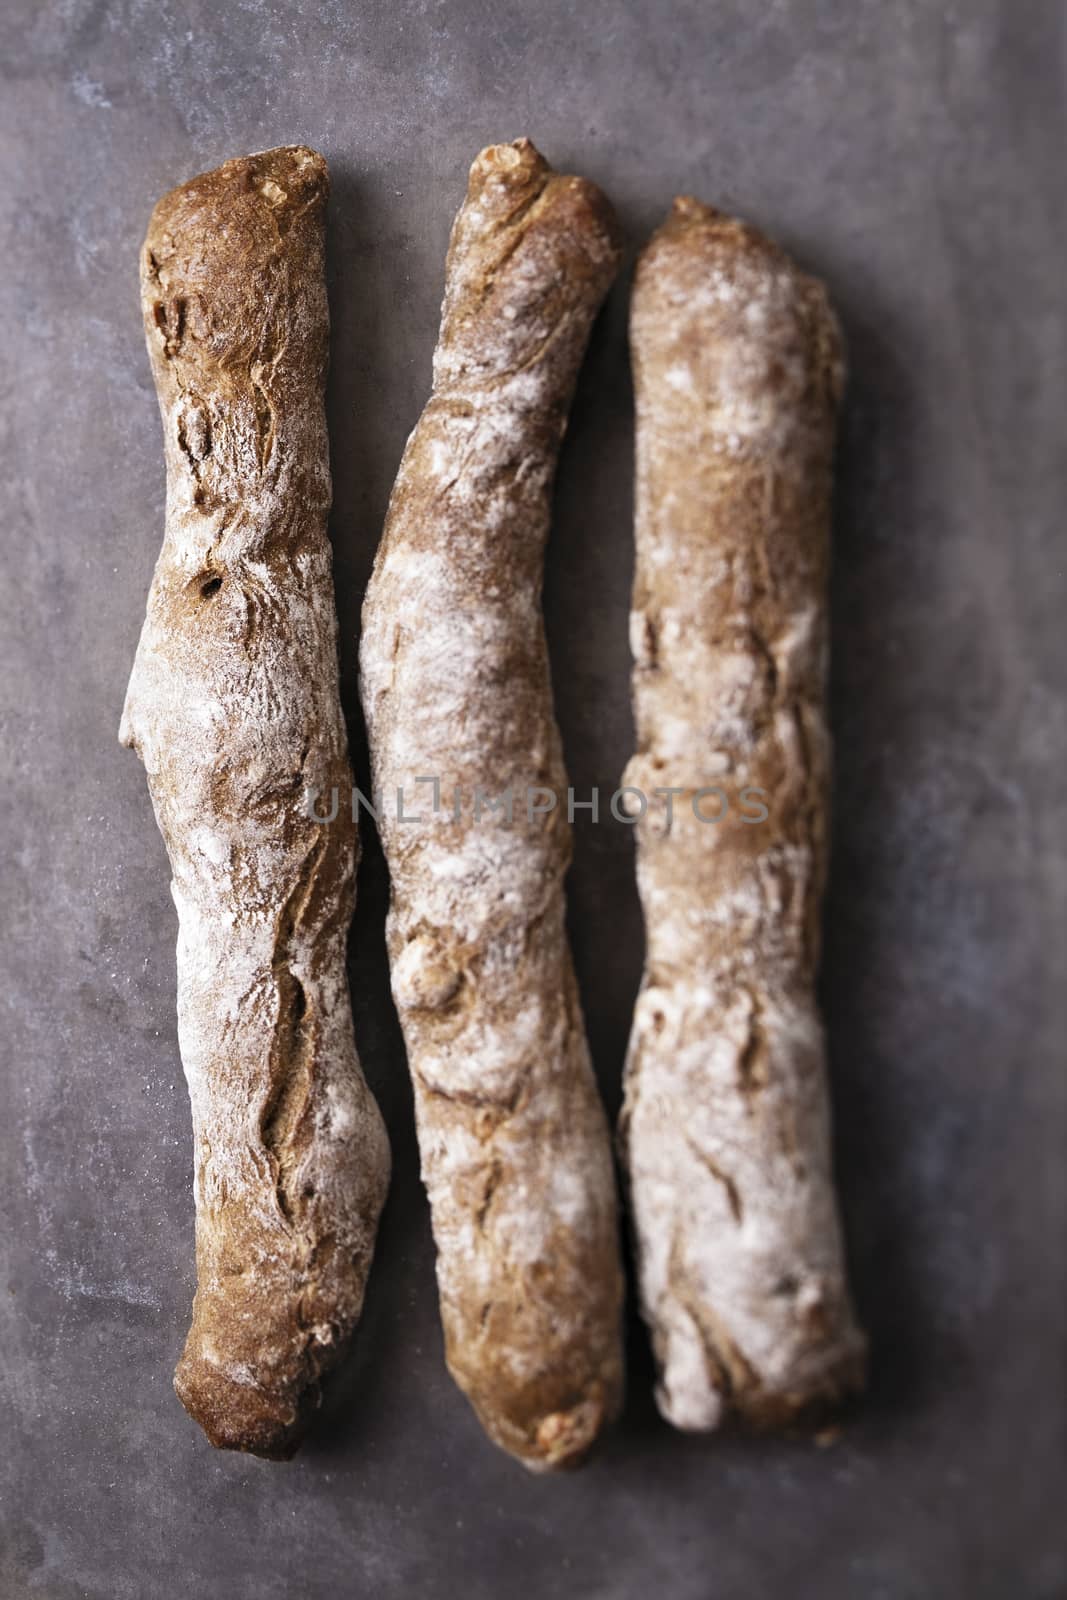 rustic artisan bread by zkruger